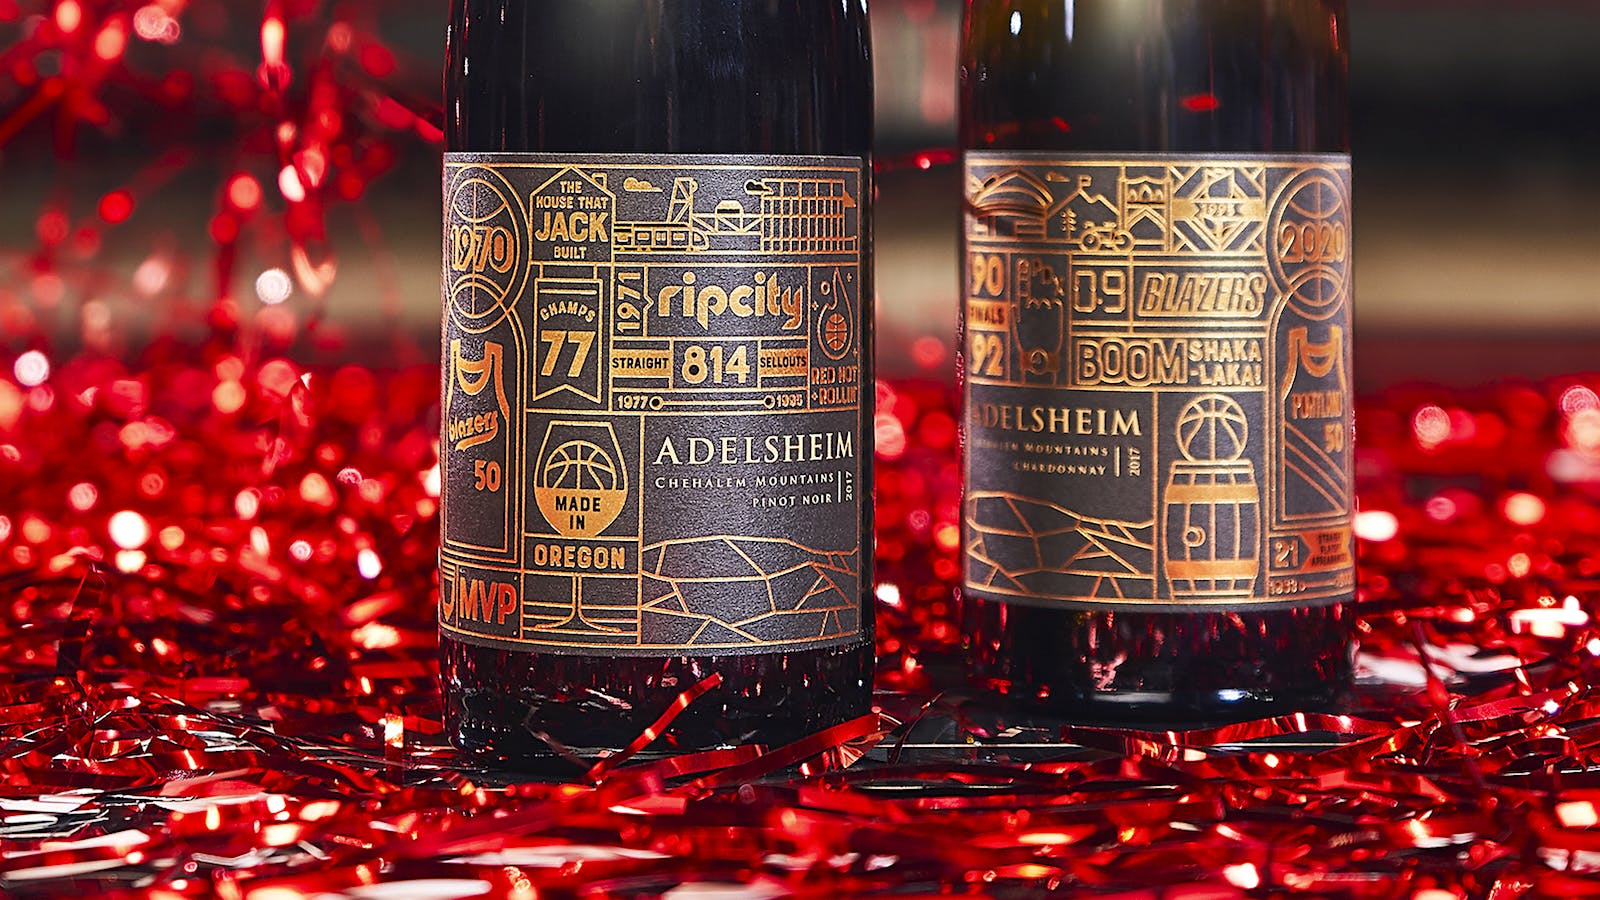 Adelsheim Rip City bottles